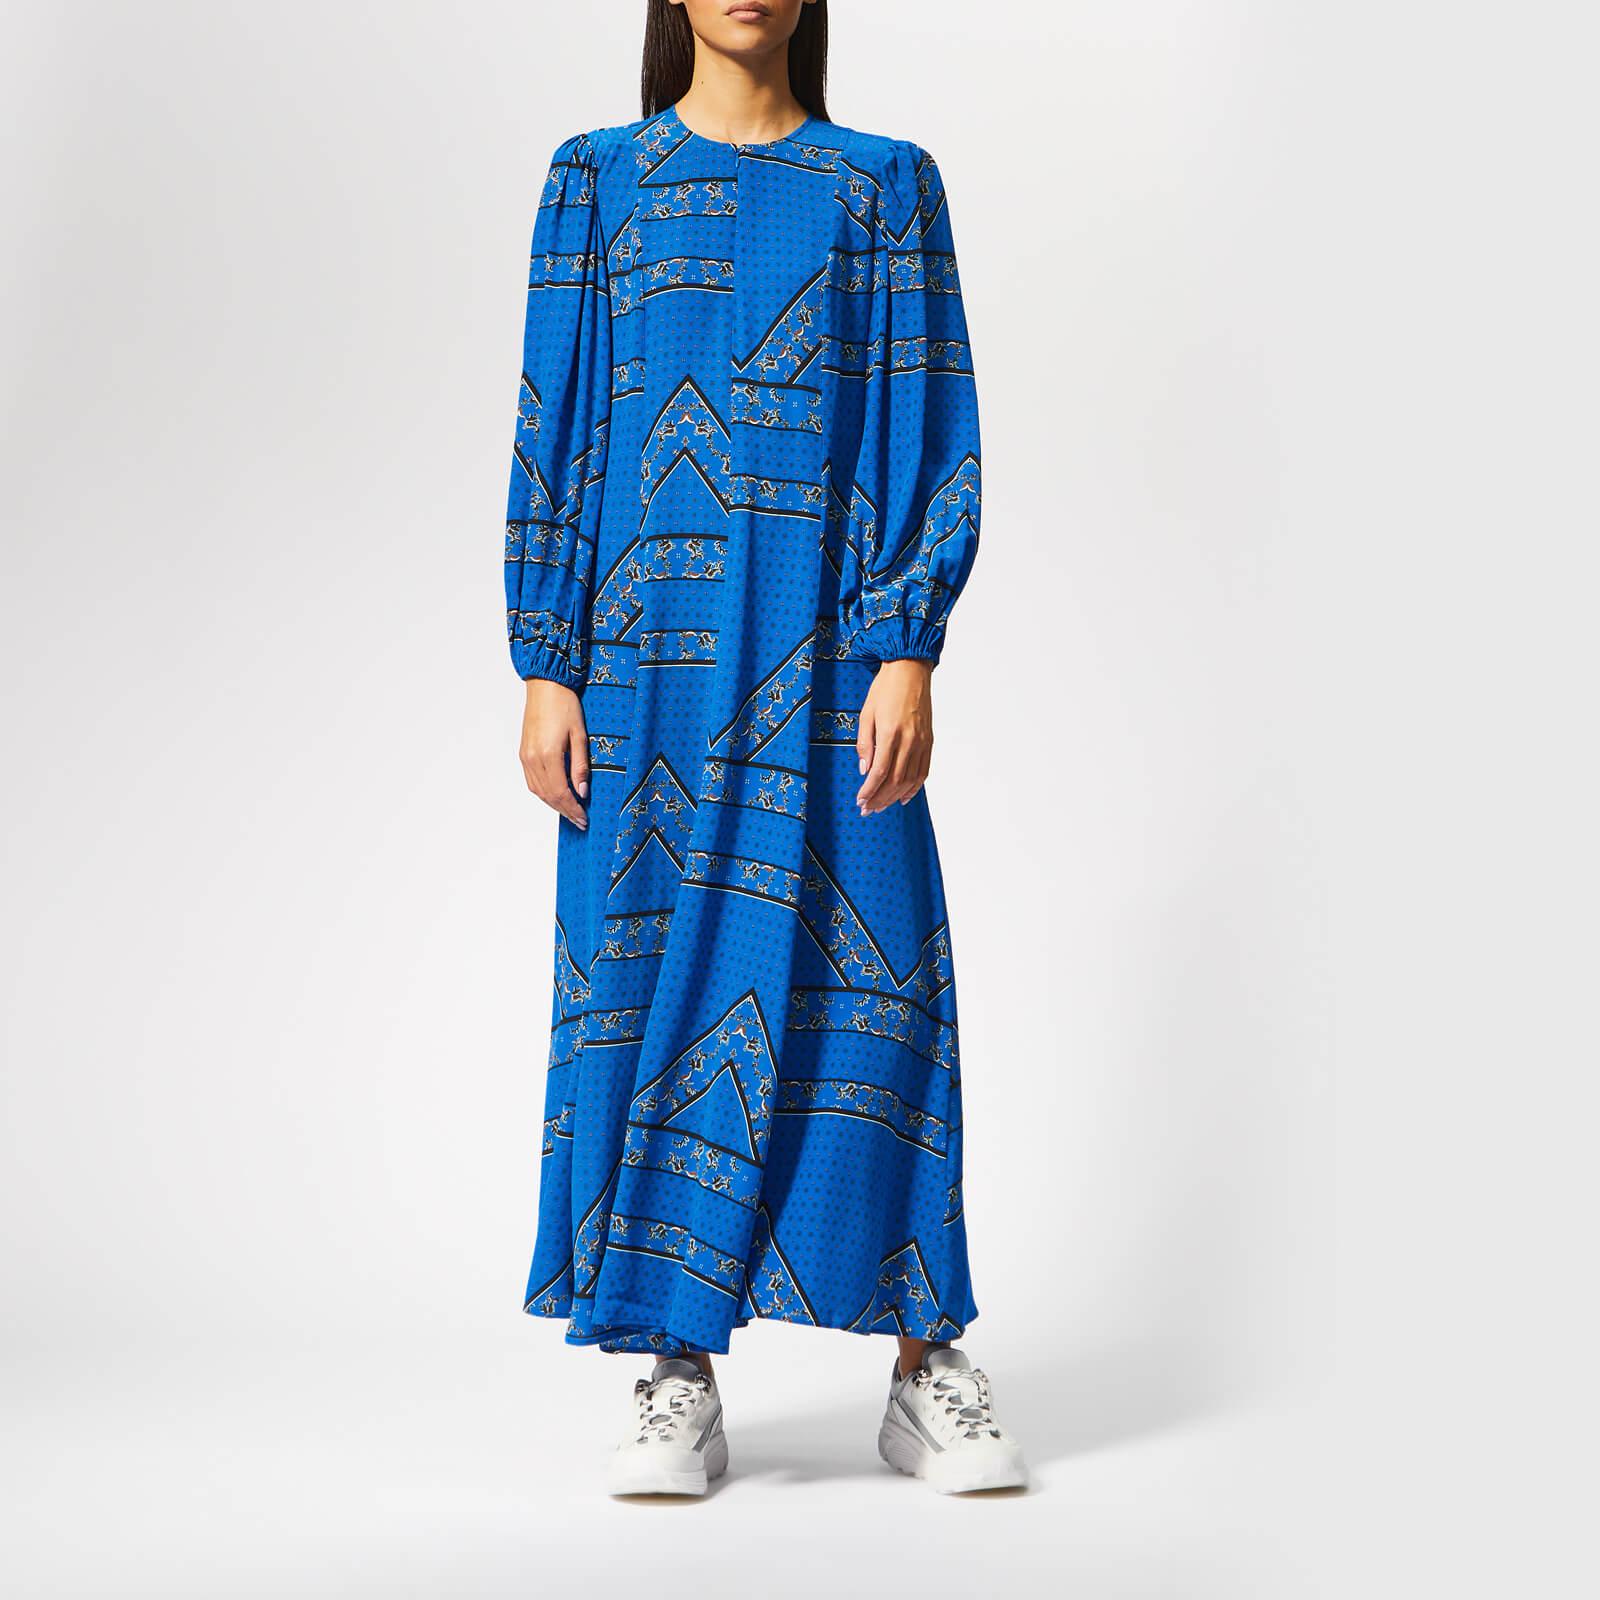 Ganni Cloverdale Printed Silk Maxi Dress in Blue - Lyst